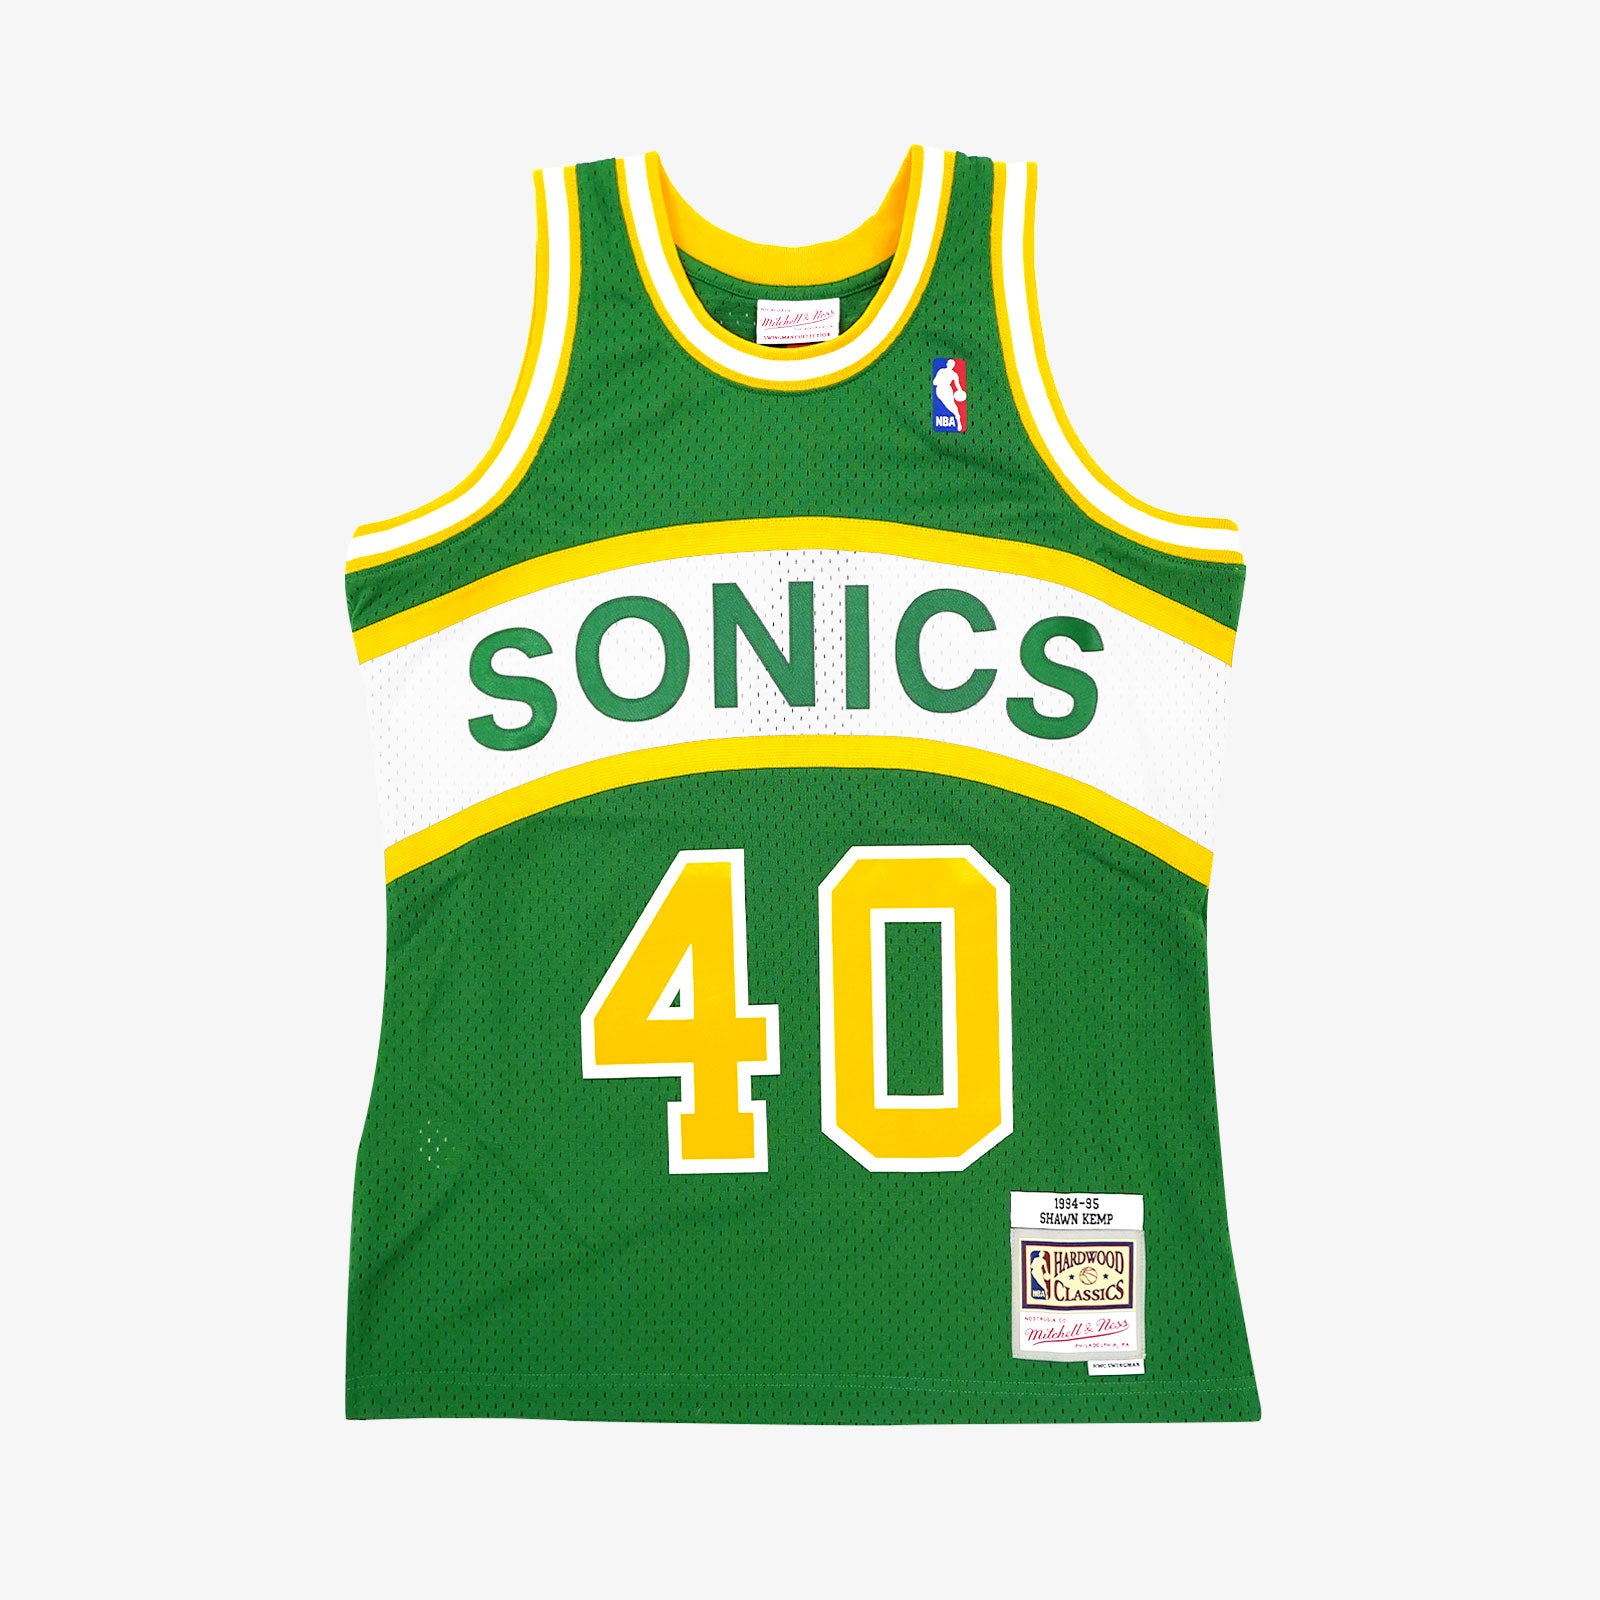 sonics green jersey